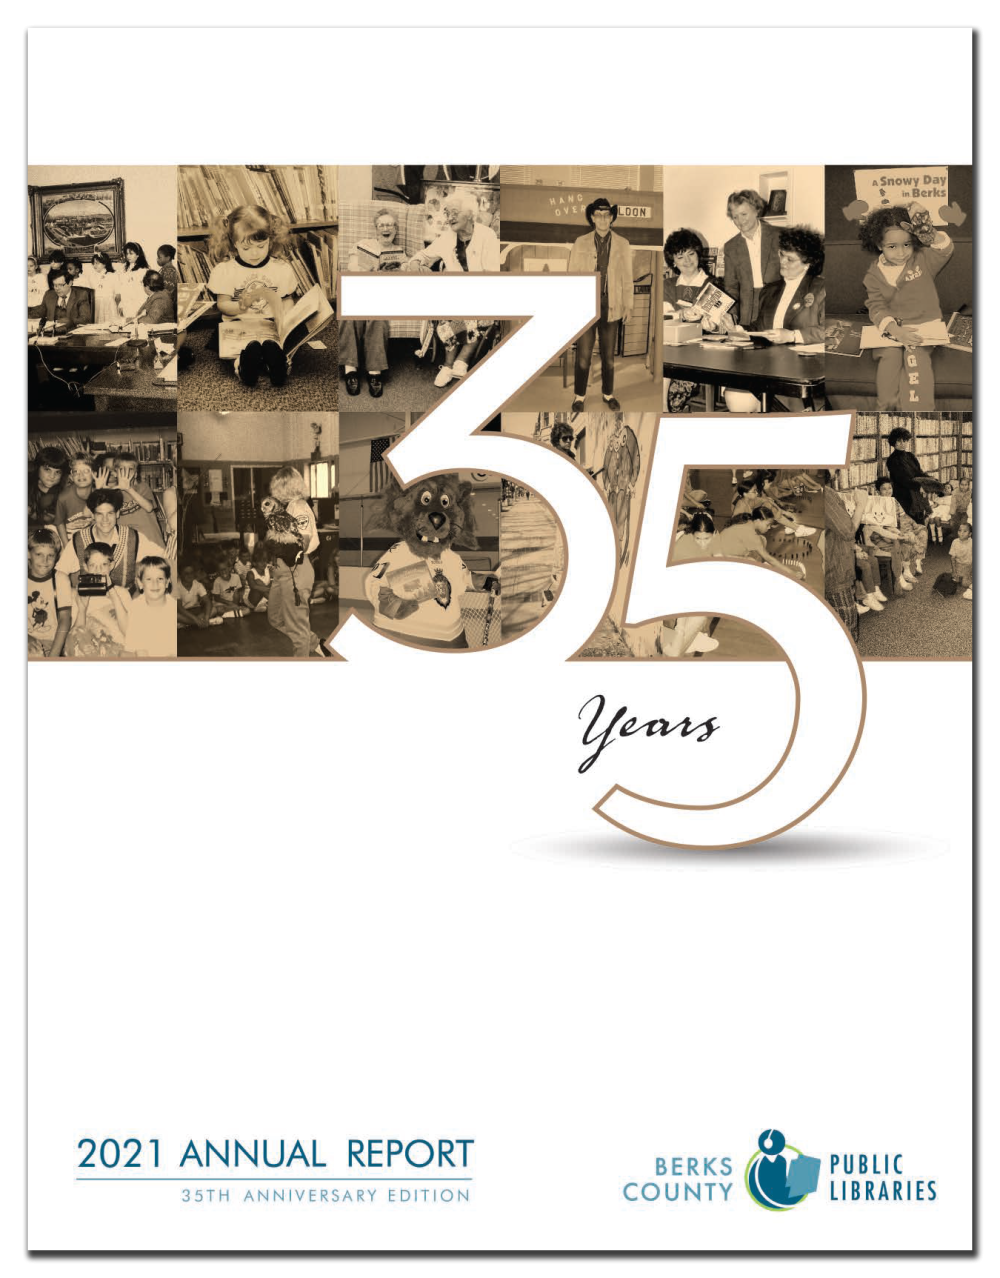 berks county public libraries 2021 annual report cover - 35th Anniversary edition